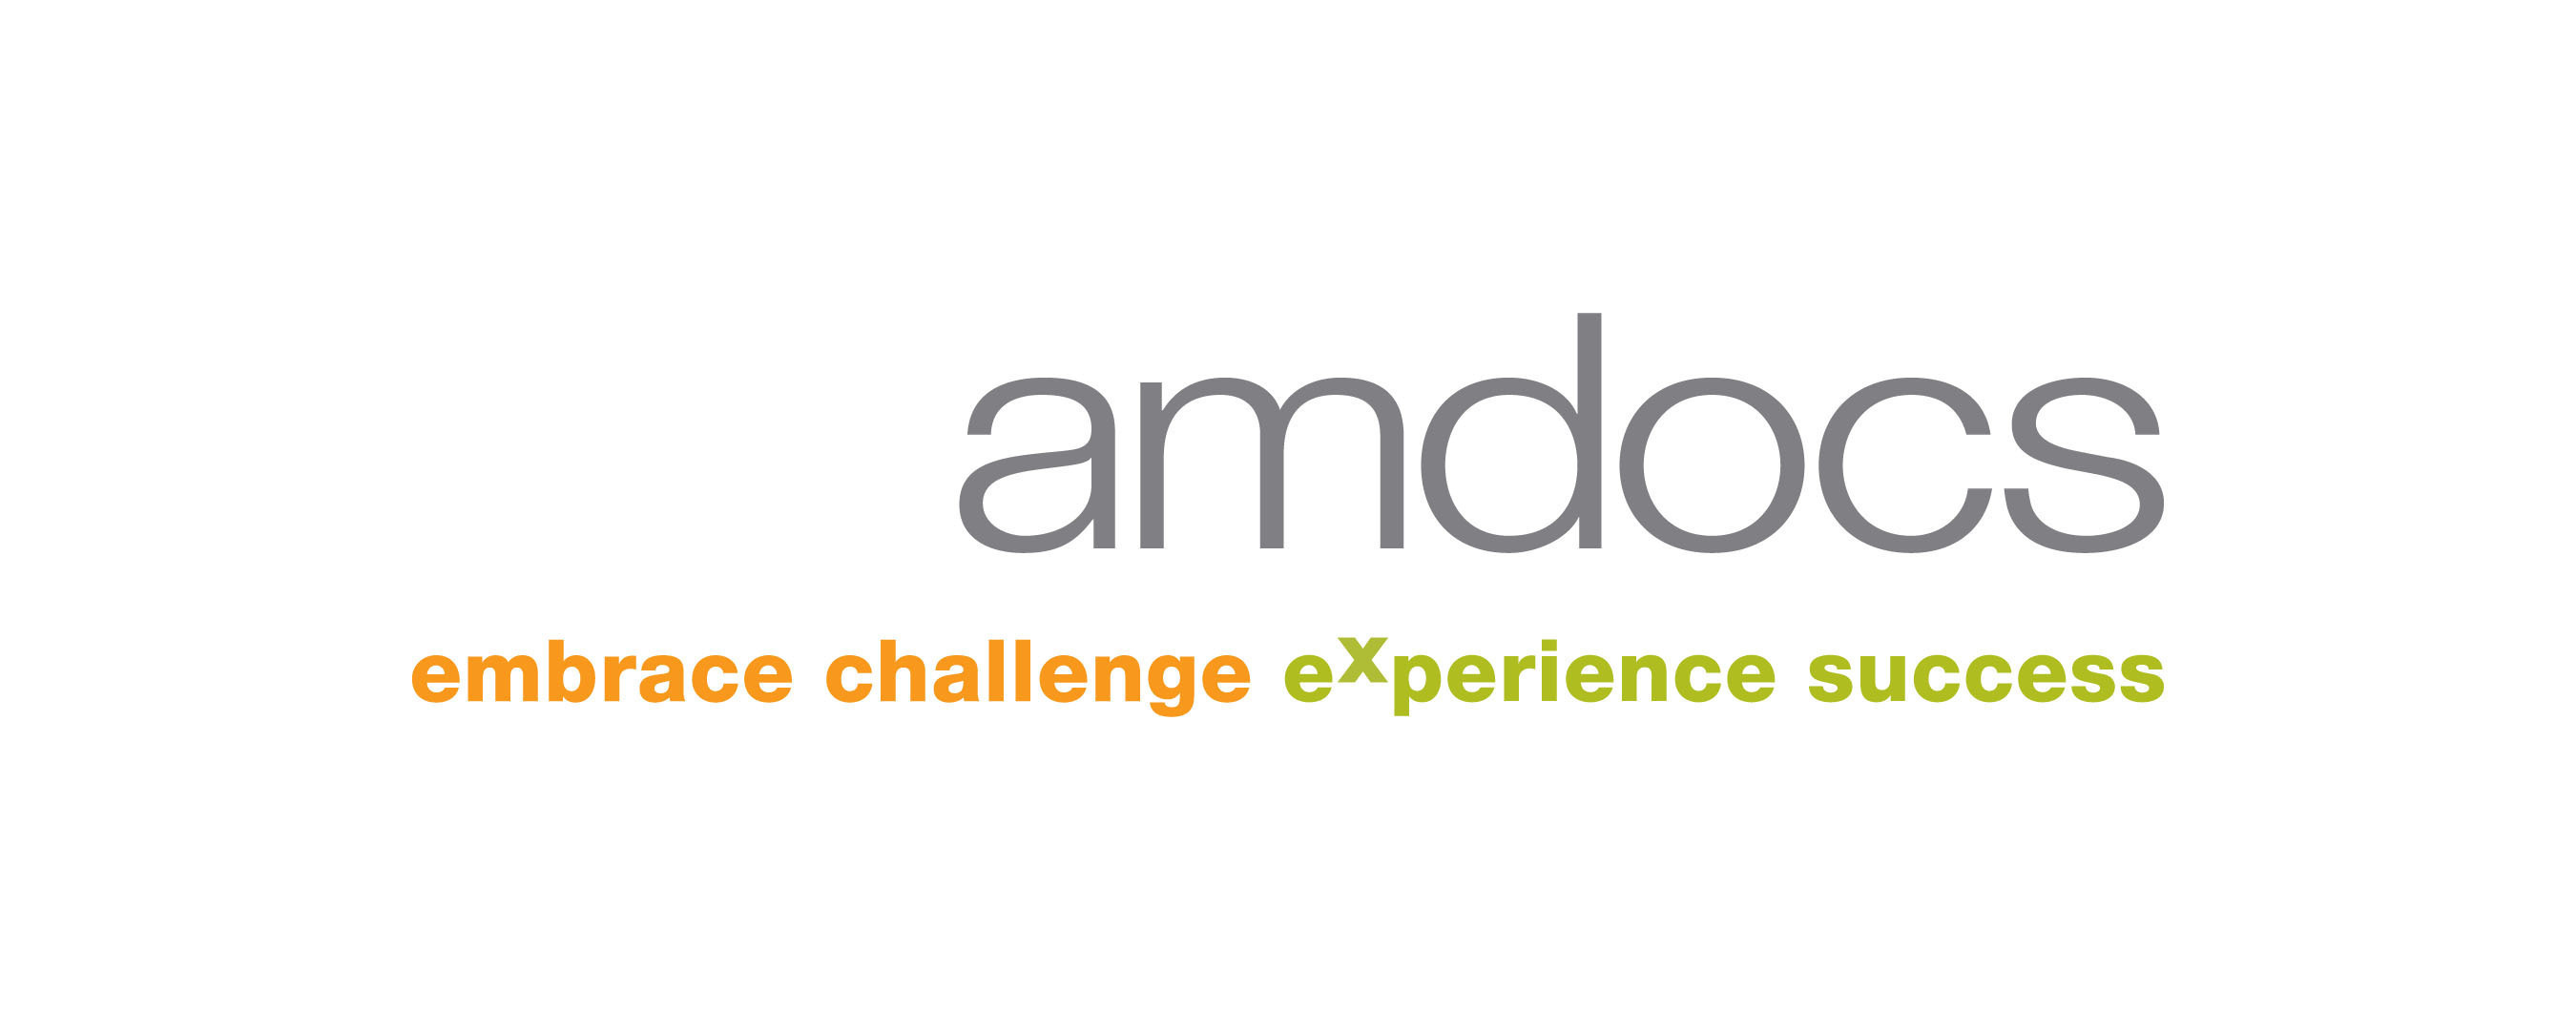 Amdocs Logo. (PRNewsFoto/Amdocs)